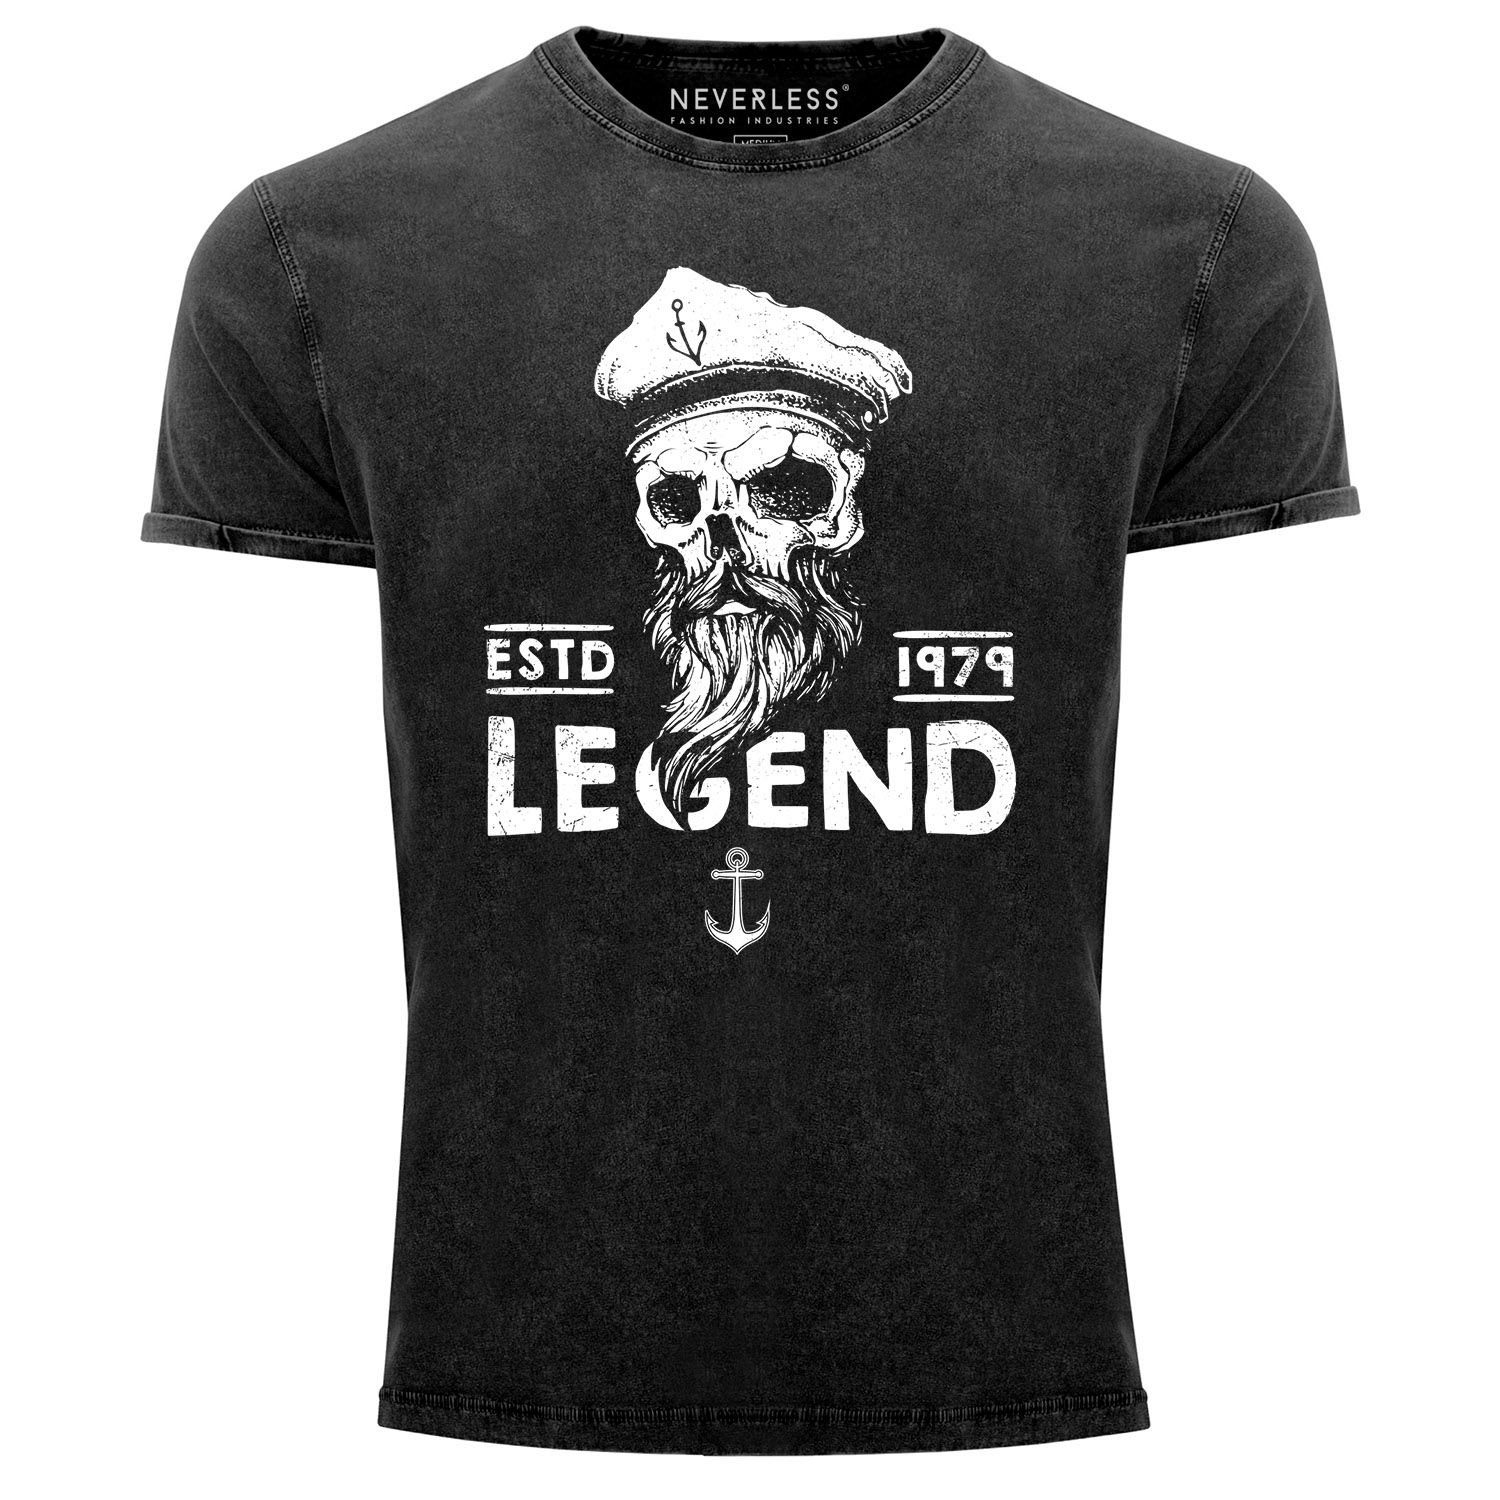 Neverless Print-Shirt Cooles Angesagtes Herren T-Shirt Vintage Shirt Totenkopf Legend Captain Aufdruck Used Look Slim Fit Neverless® mit Print schwarz